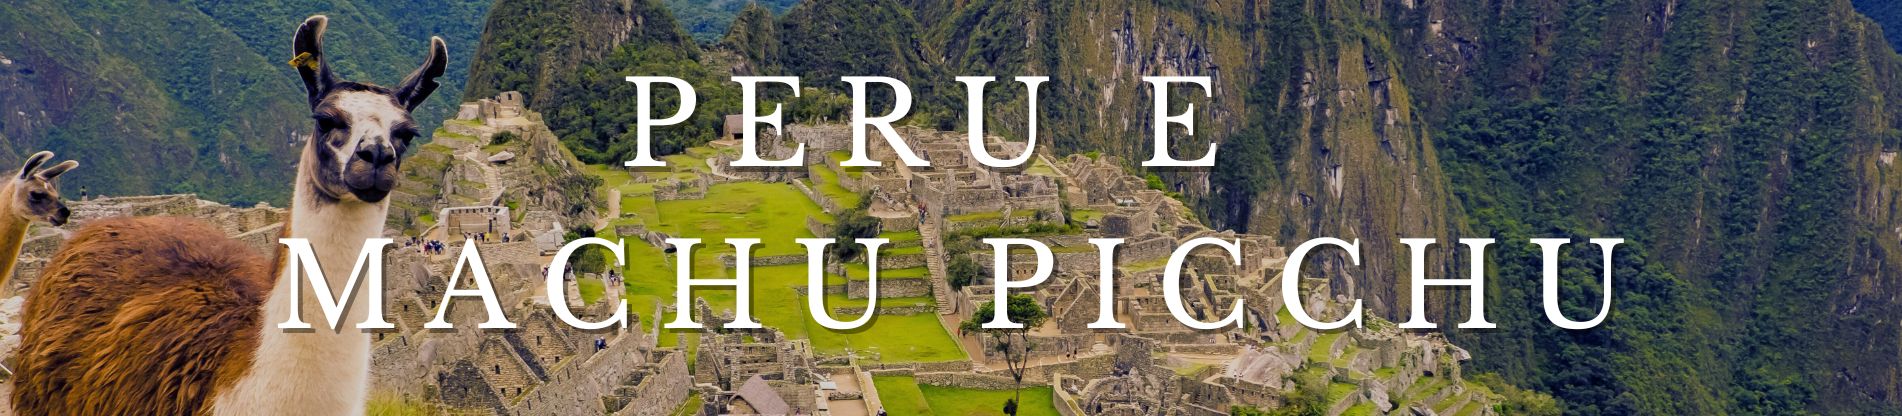 Banner Pacotes para Peru e Machu Picchu